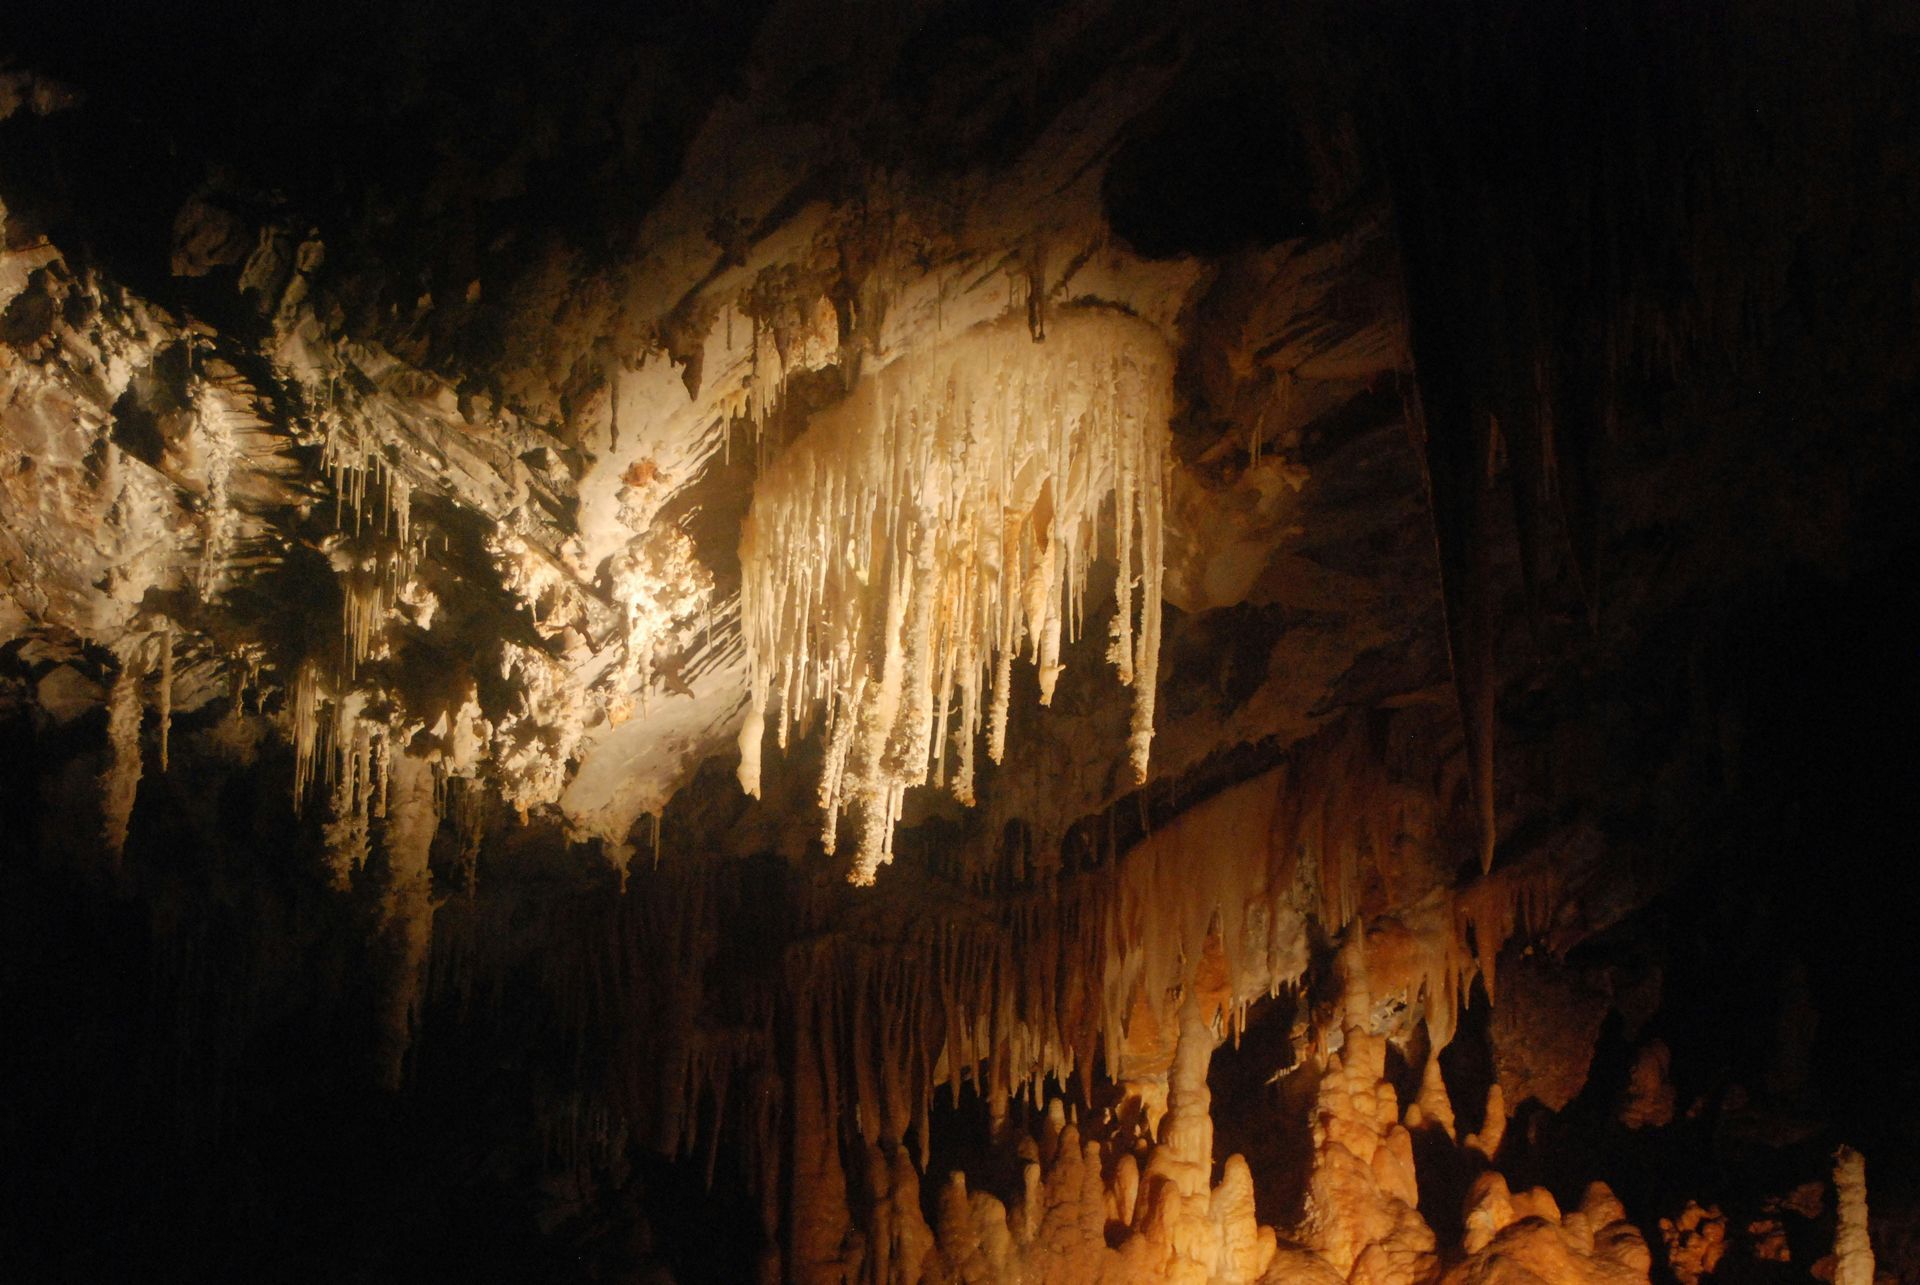 Underground Canelobre Caves